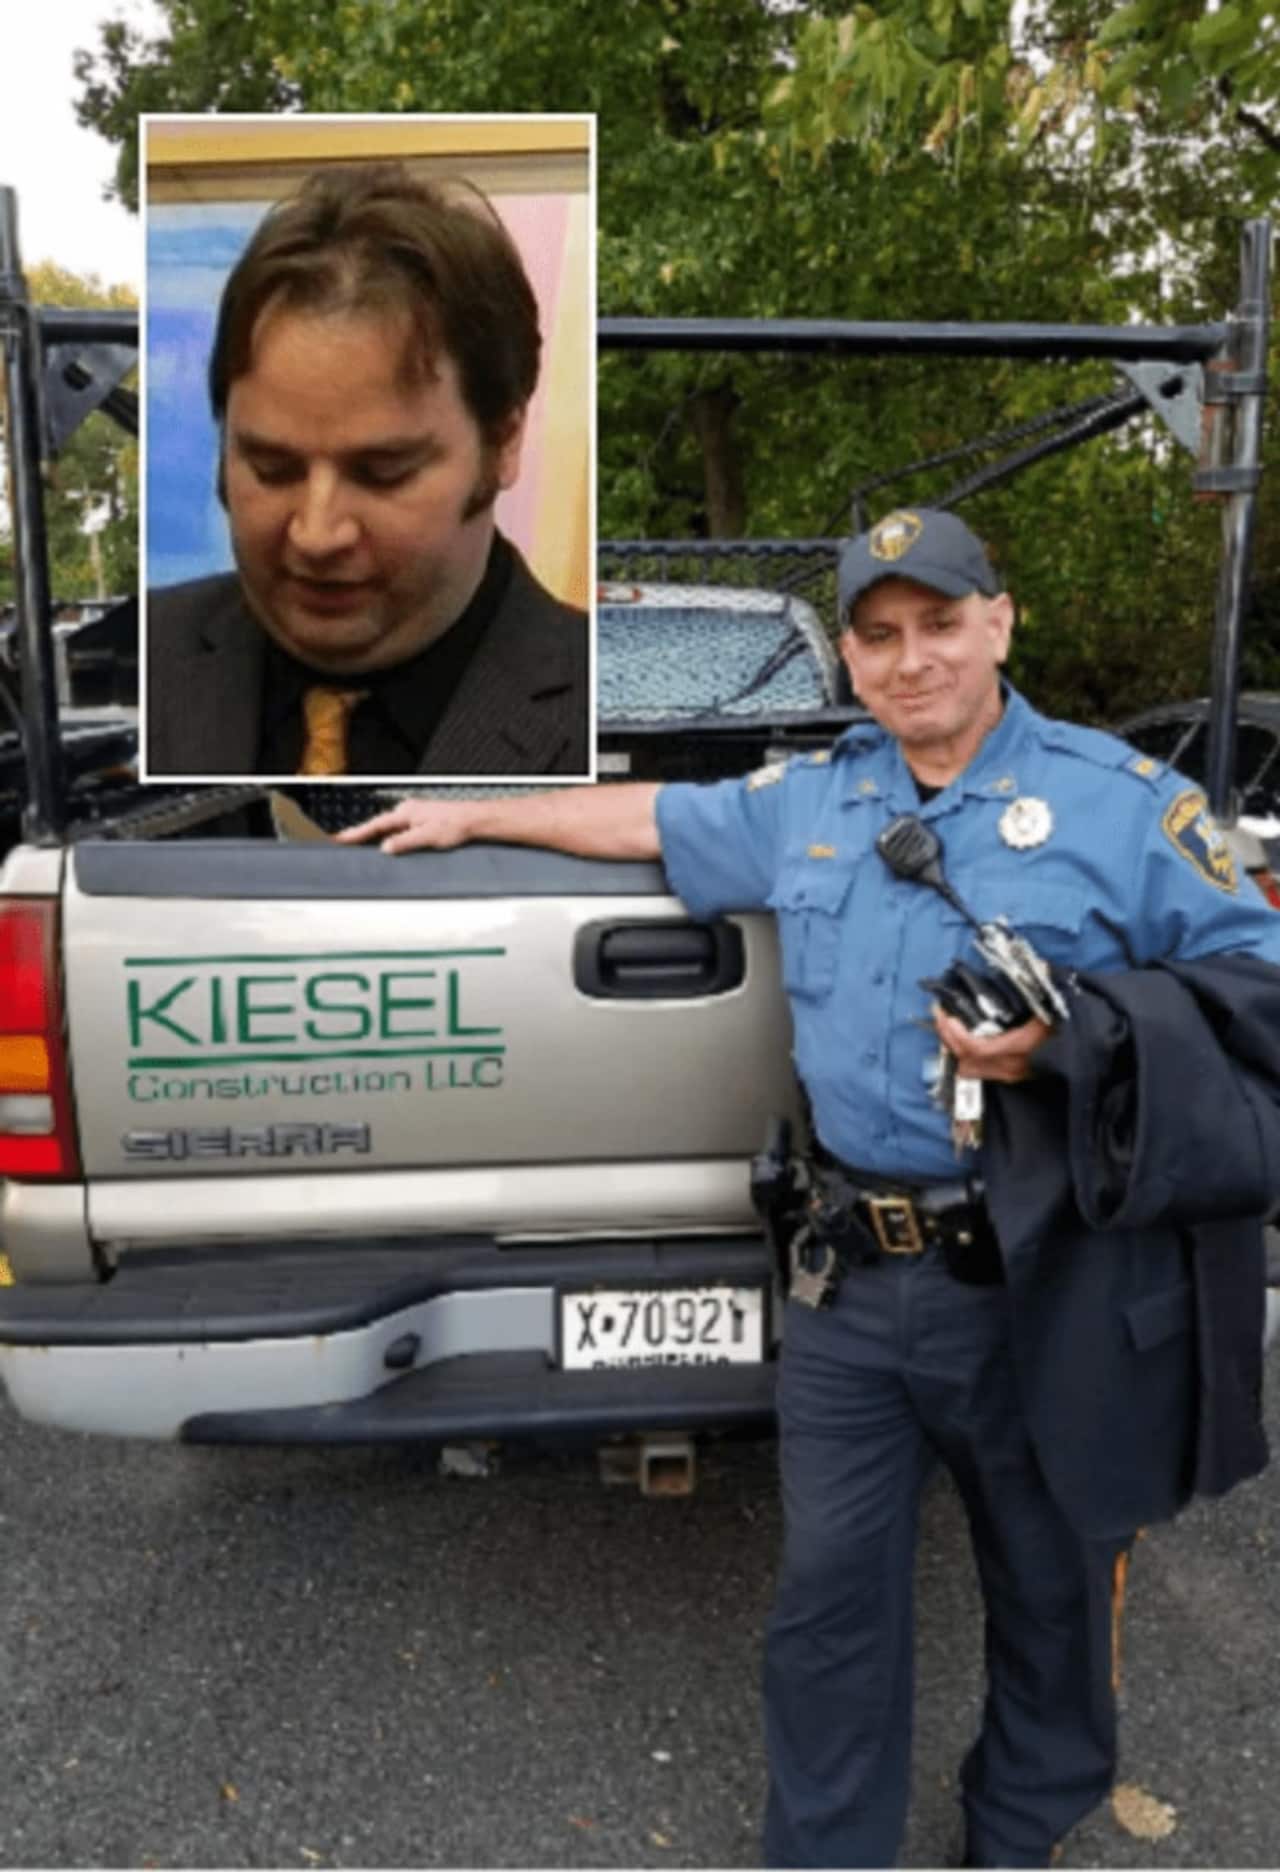 Lt. Daniel Urban with the pickup. INSET: Terence Kiesel